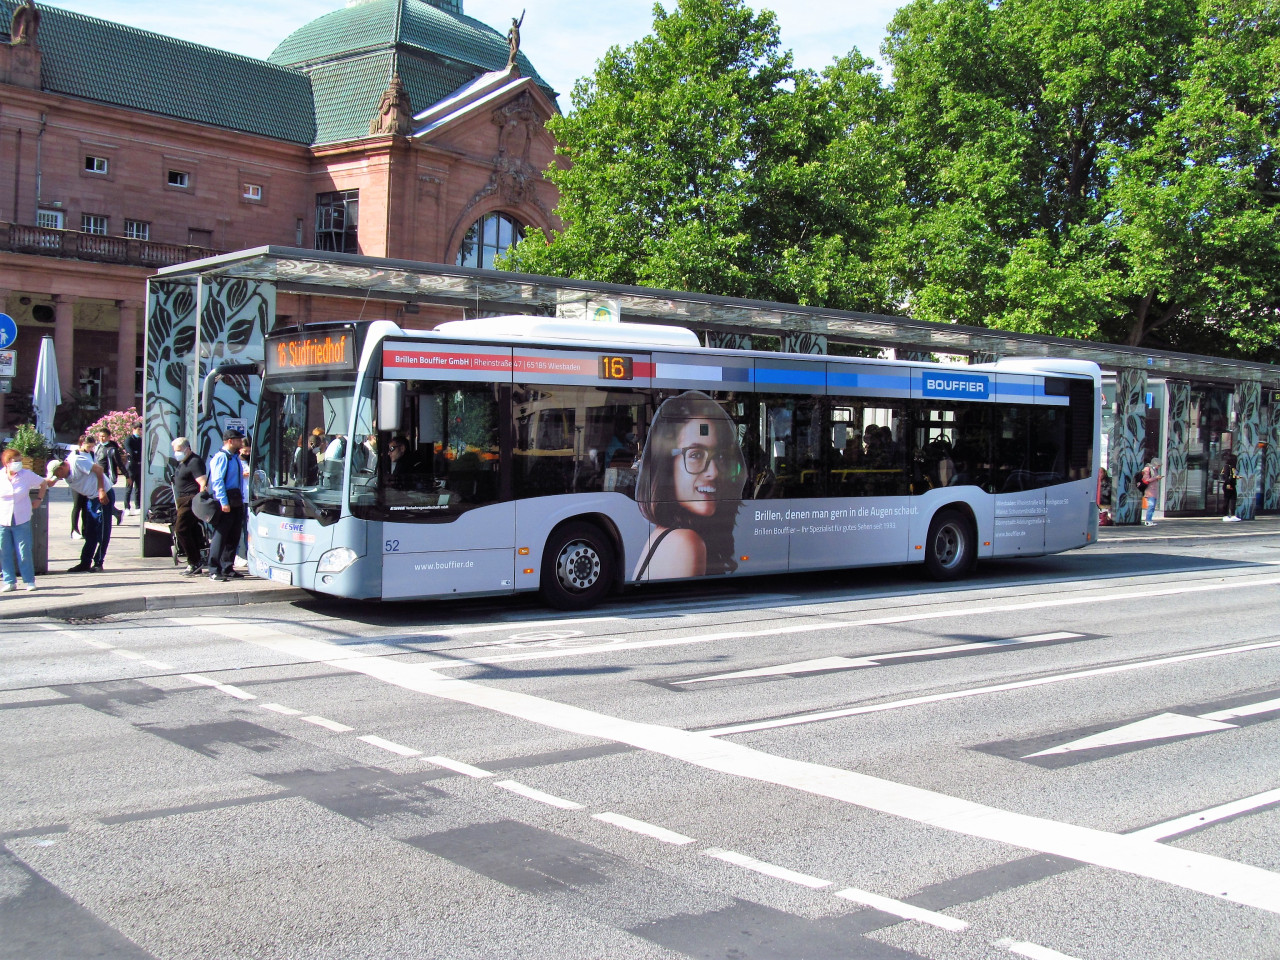 Autobus MHD (jezd zde velmi asto + kloubov; inu, chyb tram) ped ndram